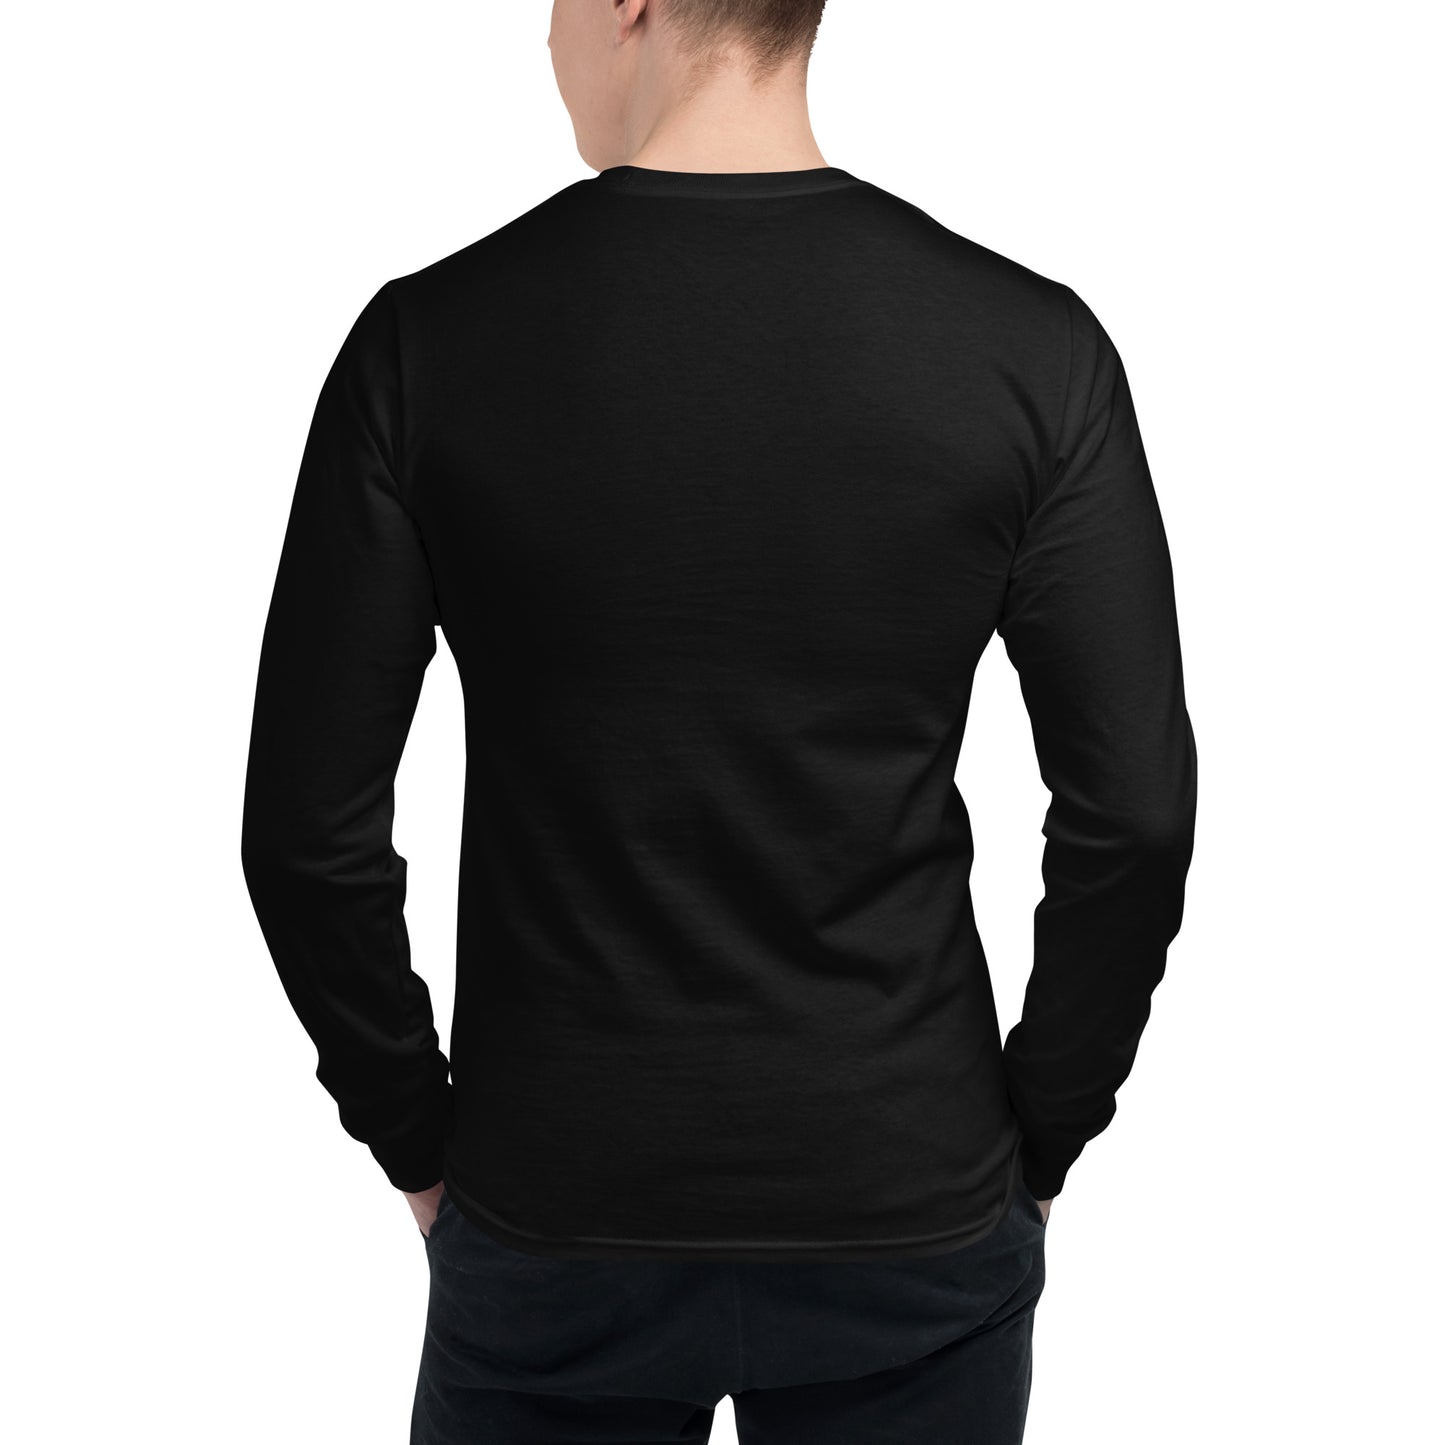 Metaverse Professional - Men's Champion Long Sleeve Shirt